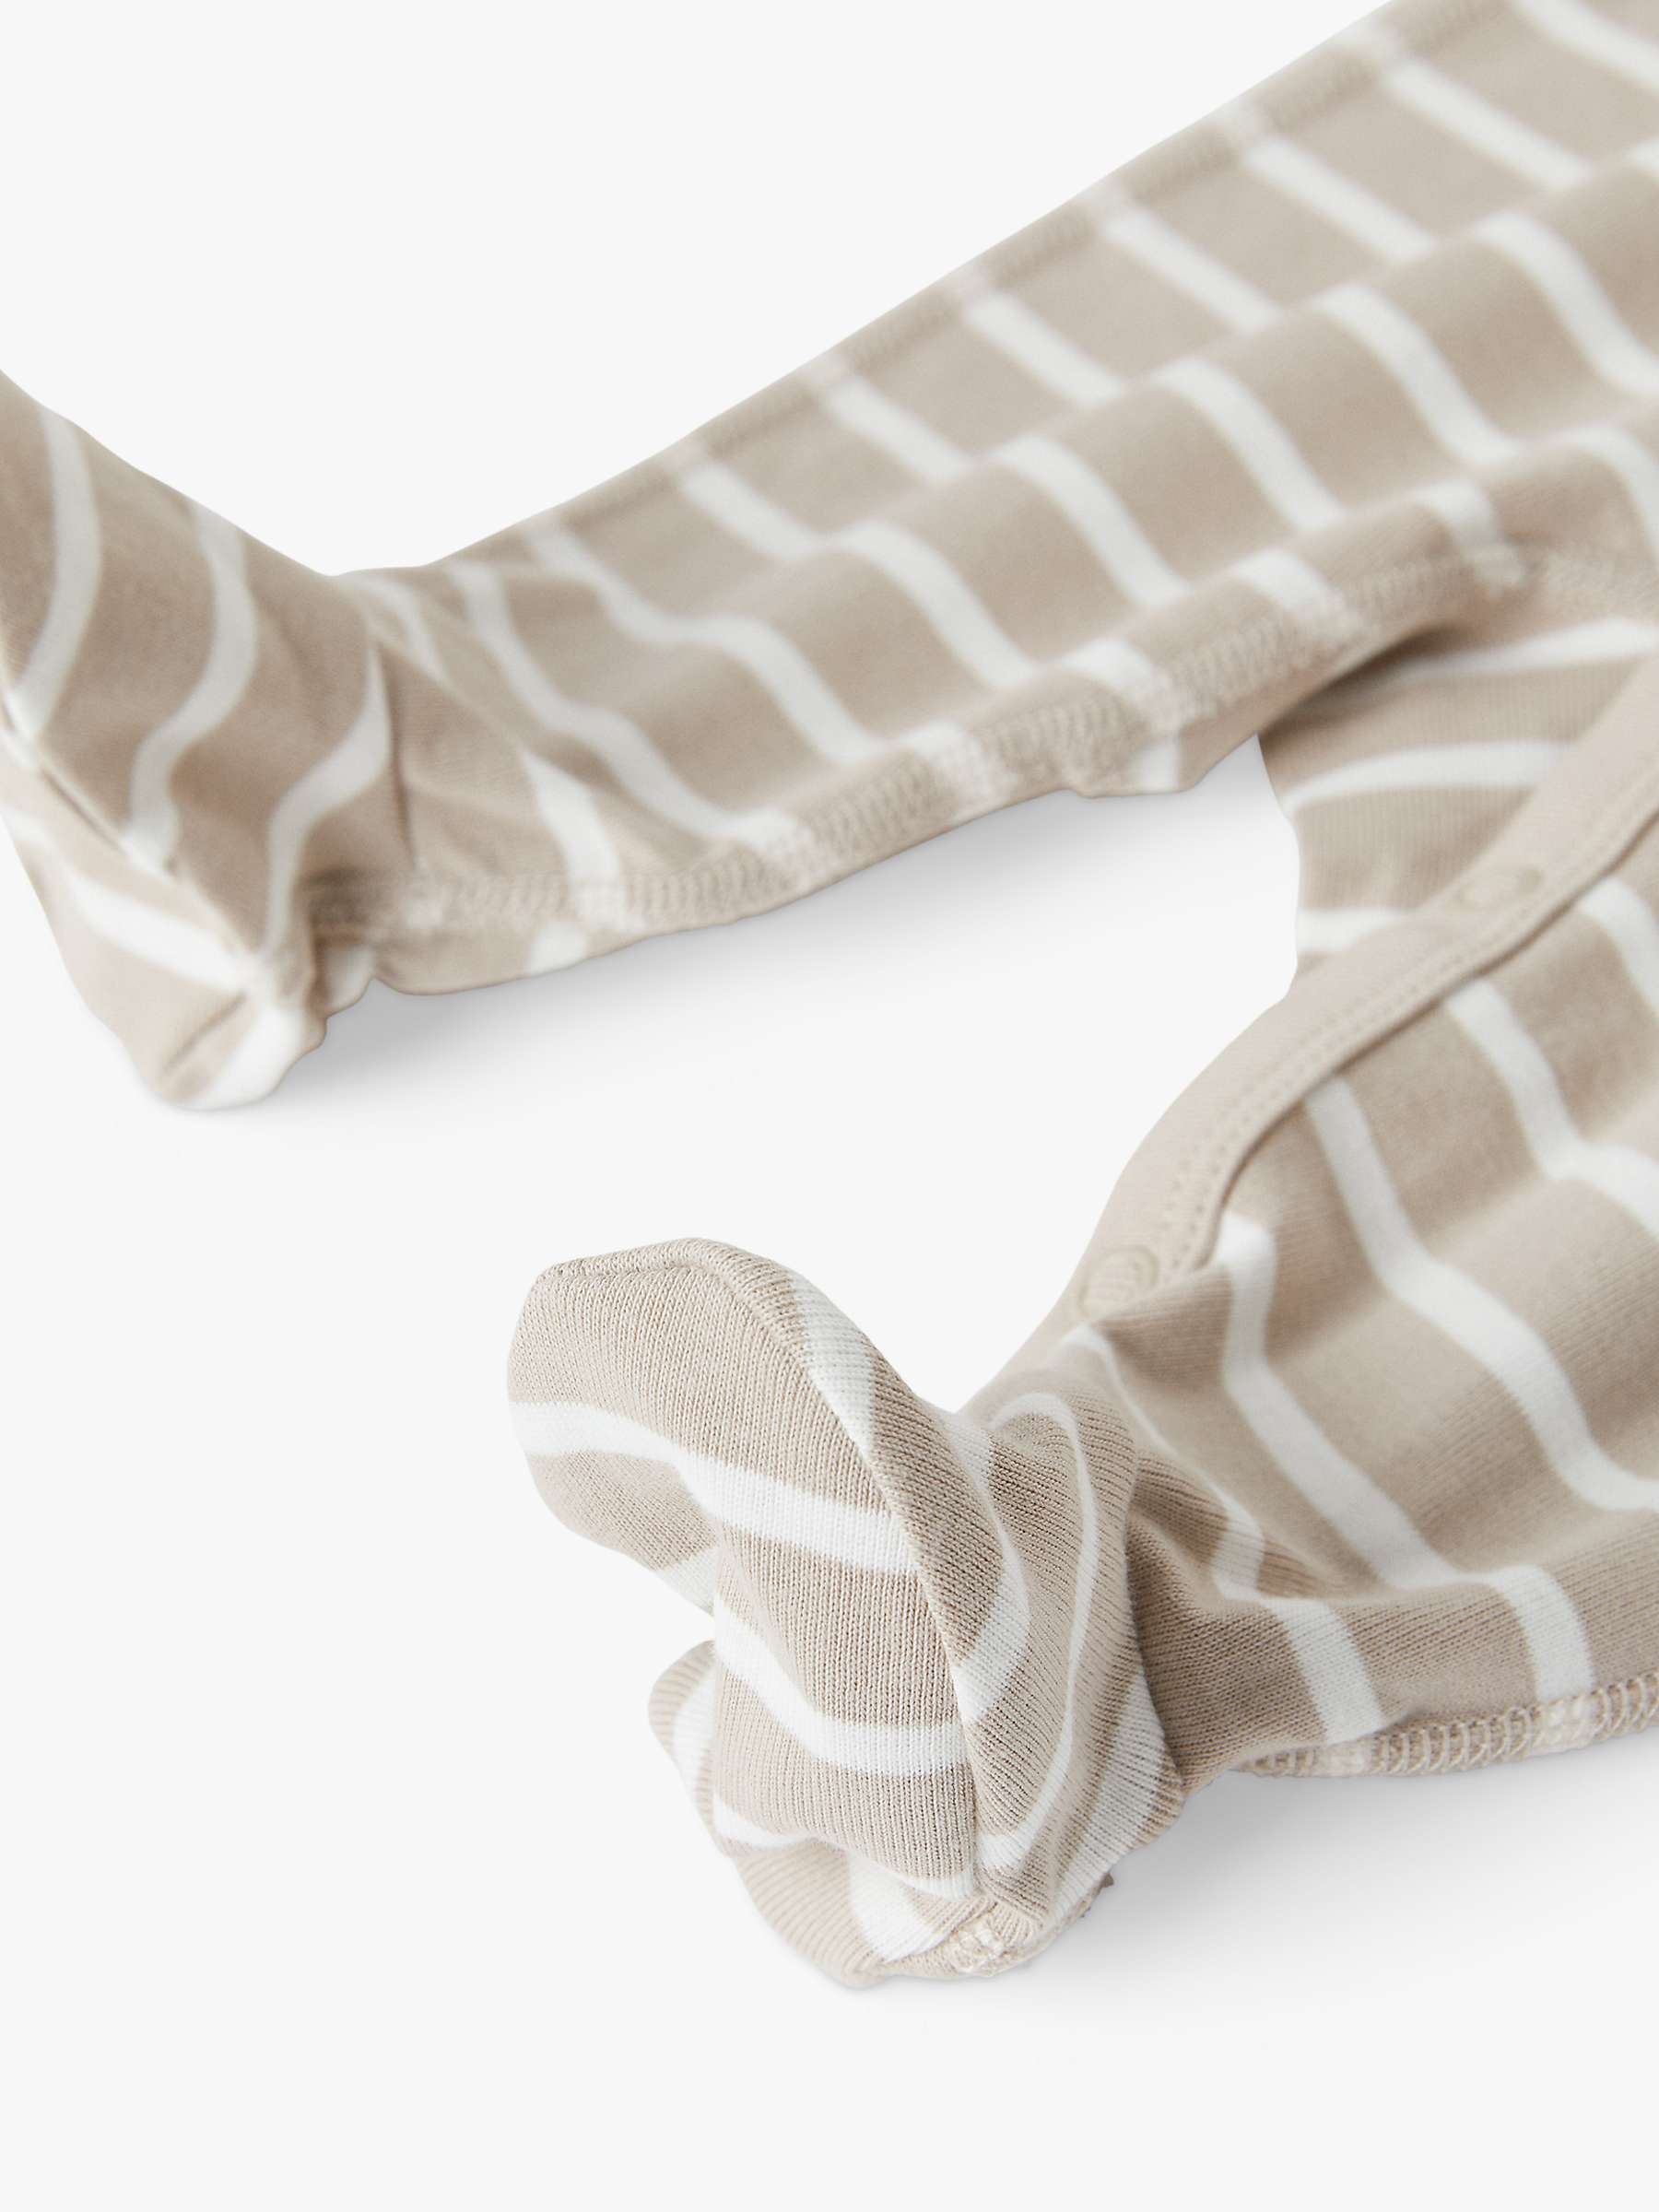 Buy Polarn O. Pyret Baby Organic Cotton Stripe Sleepsuit, Natural Online at johnlewis.com